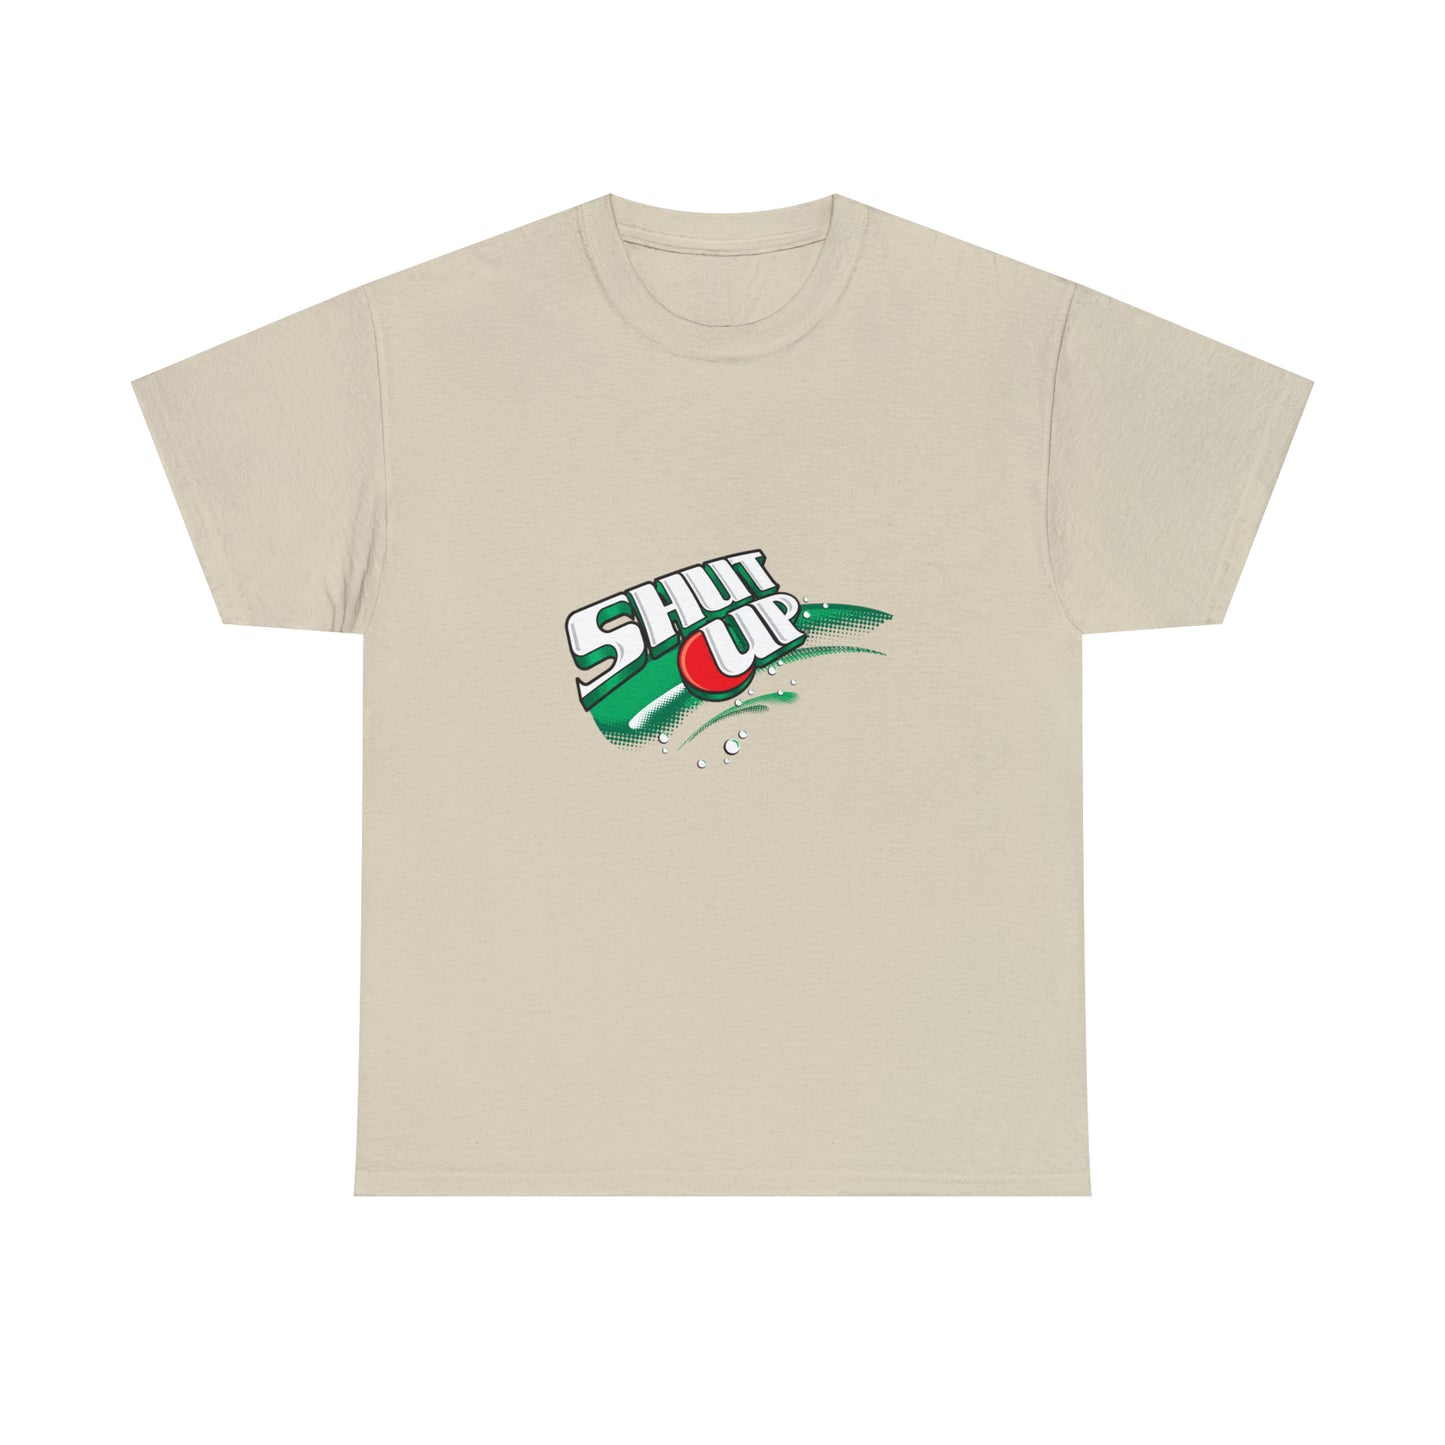 Custom Parody T-shirt, Shut-up shirt design